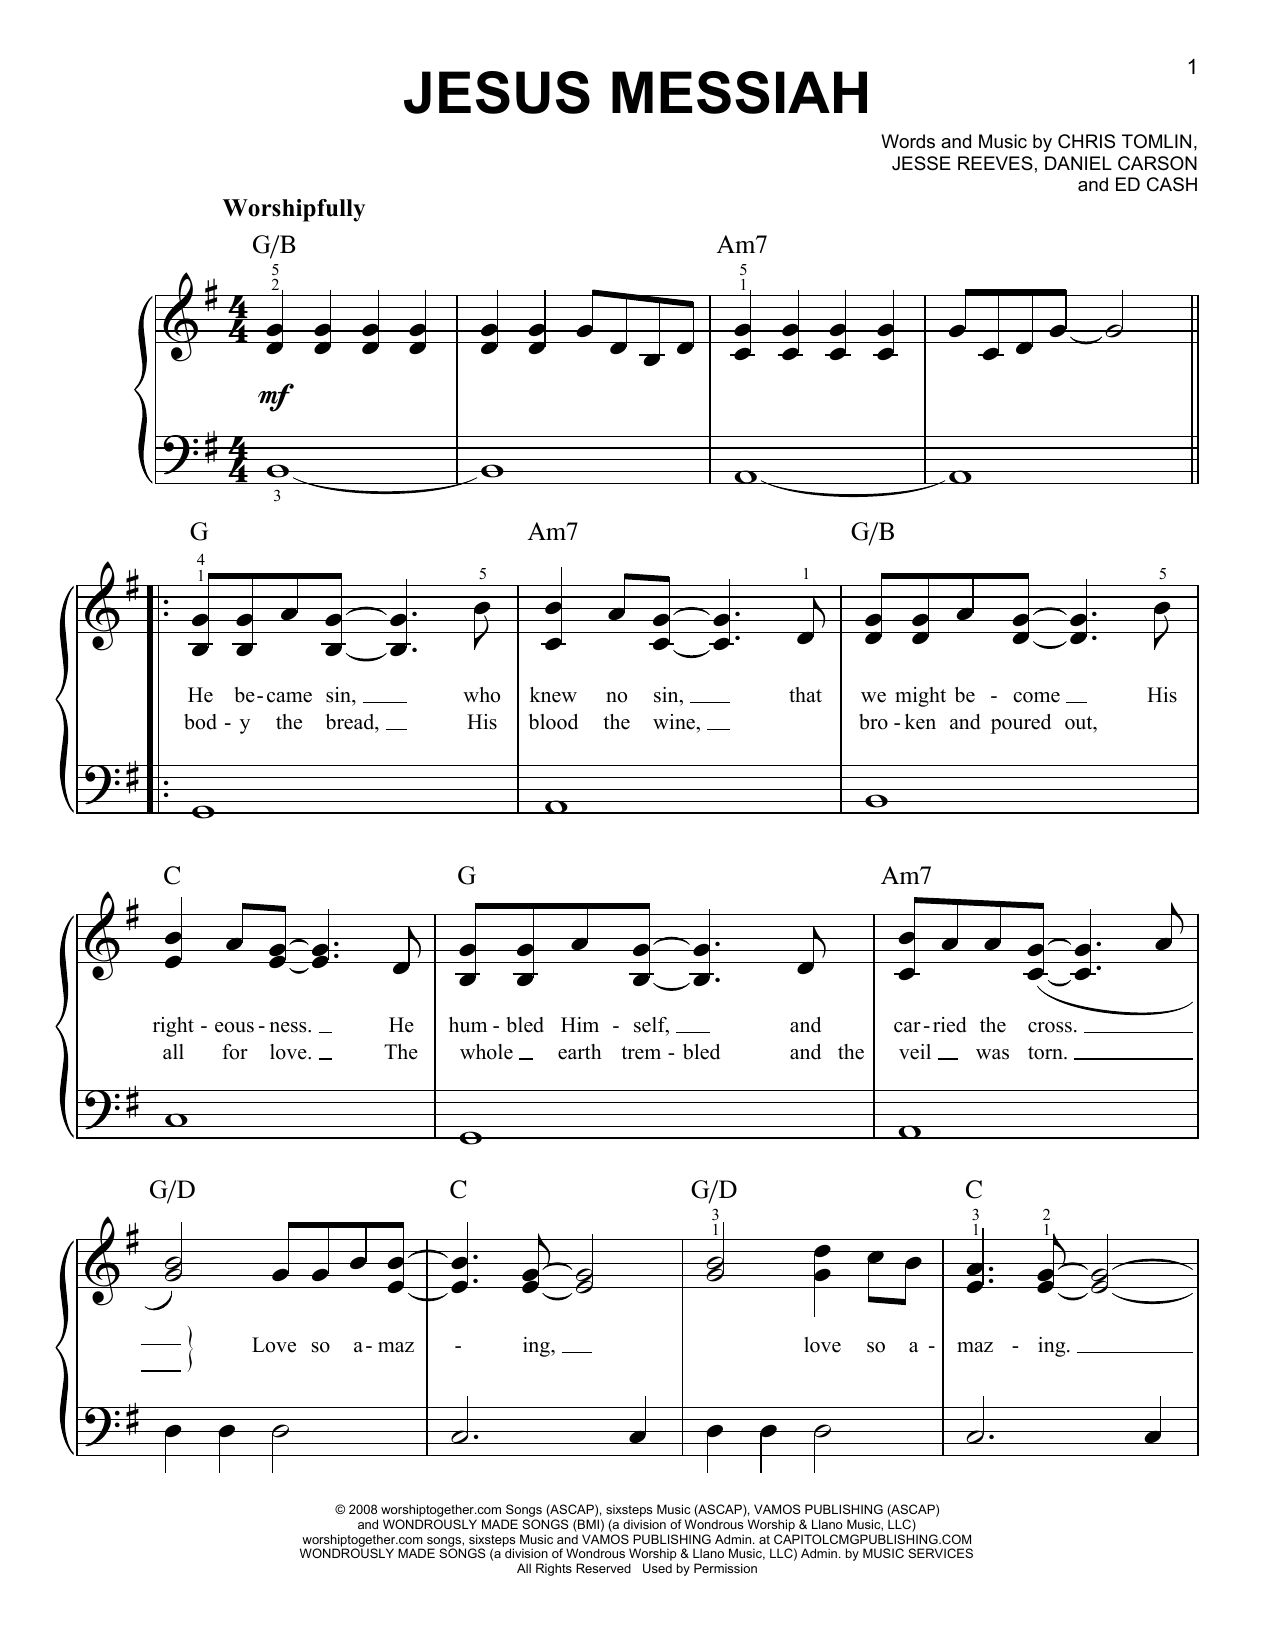 Chris Tomlin Jesus Messiah Sheet Music Notes & Chords for Easy Guitar Tab - Download or Print PDF